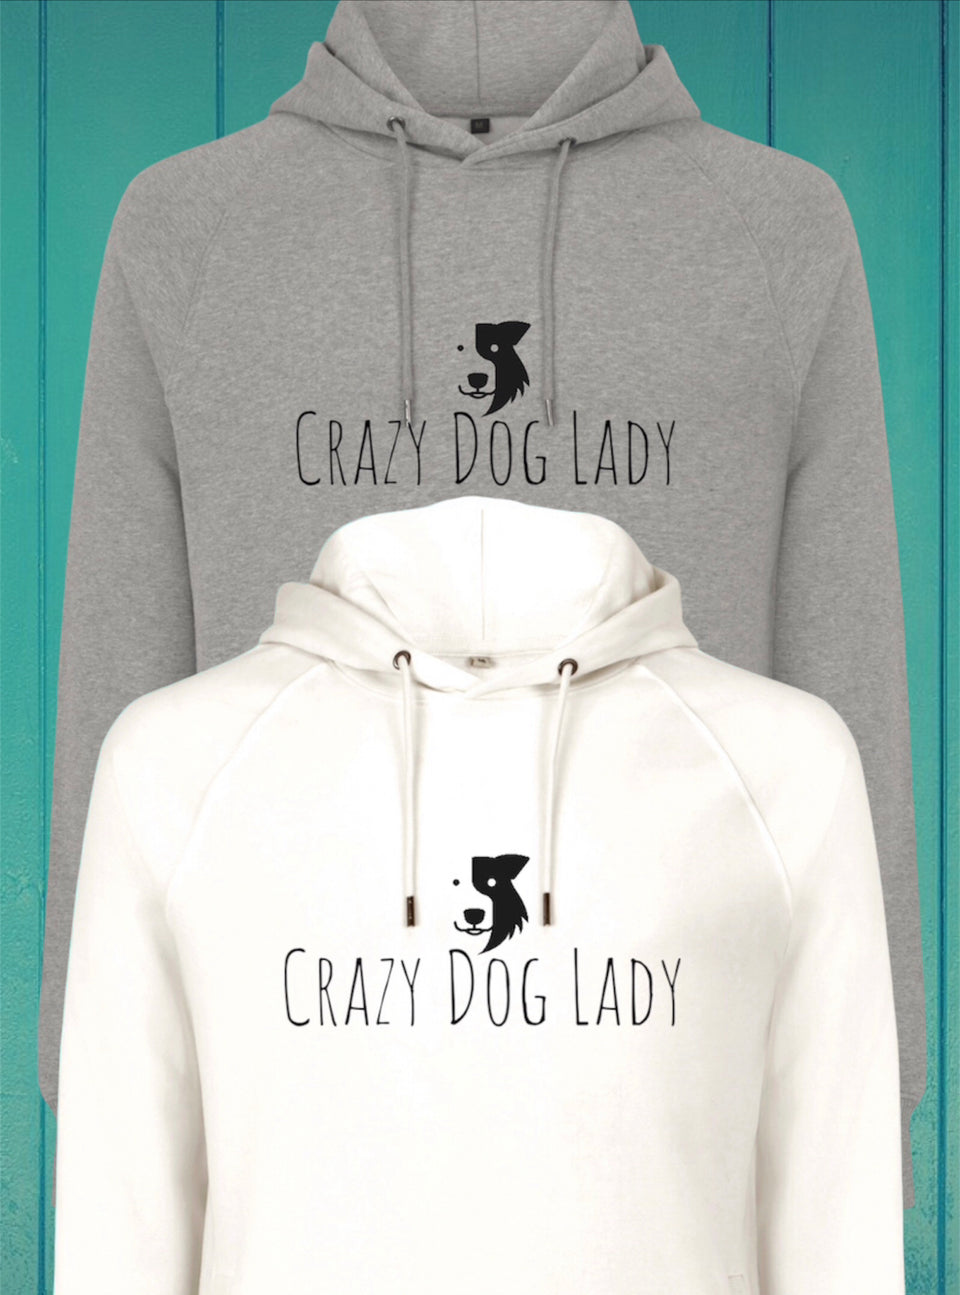 Crazy Dog Lady - Unisex Organic Hoody